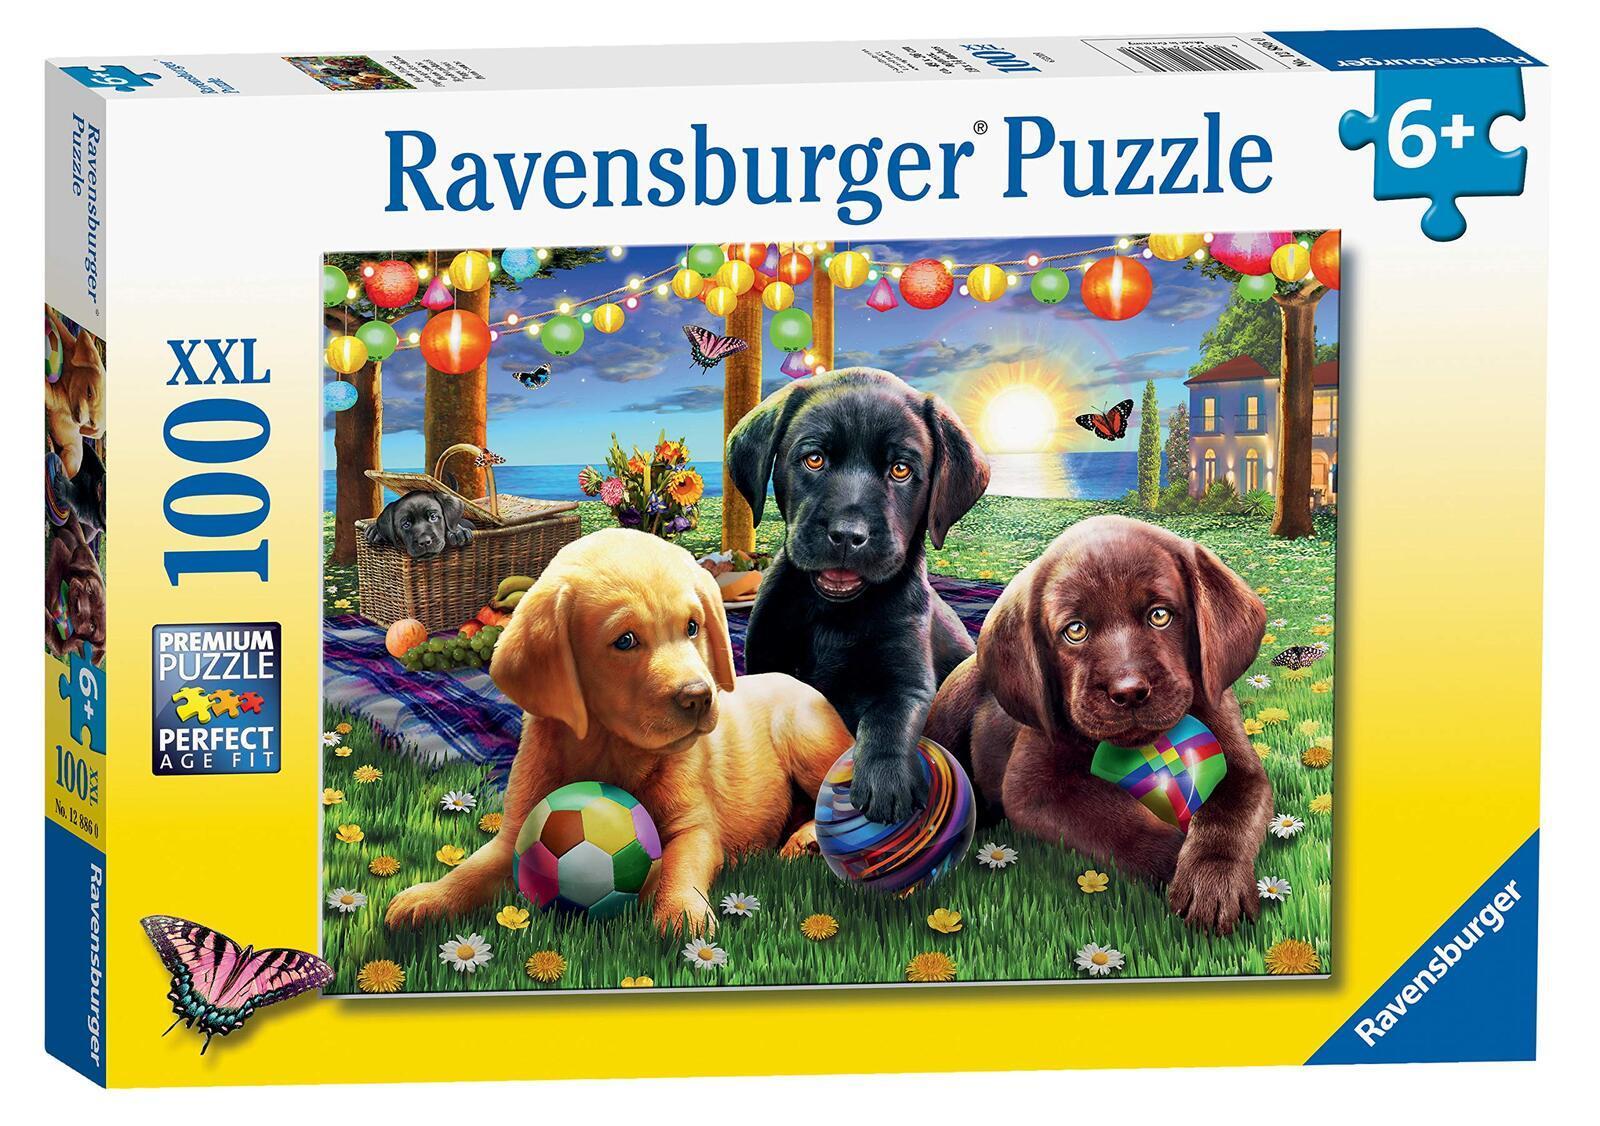 Ravensburger Puzzle 100pc XXL - Puppy Picnic